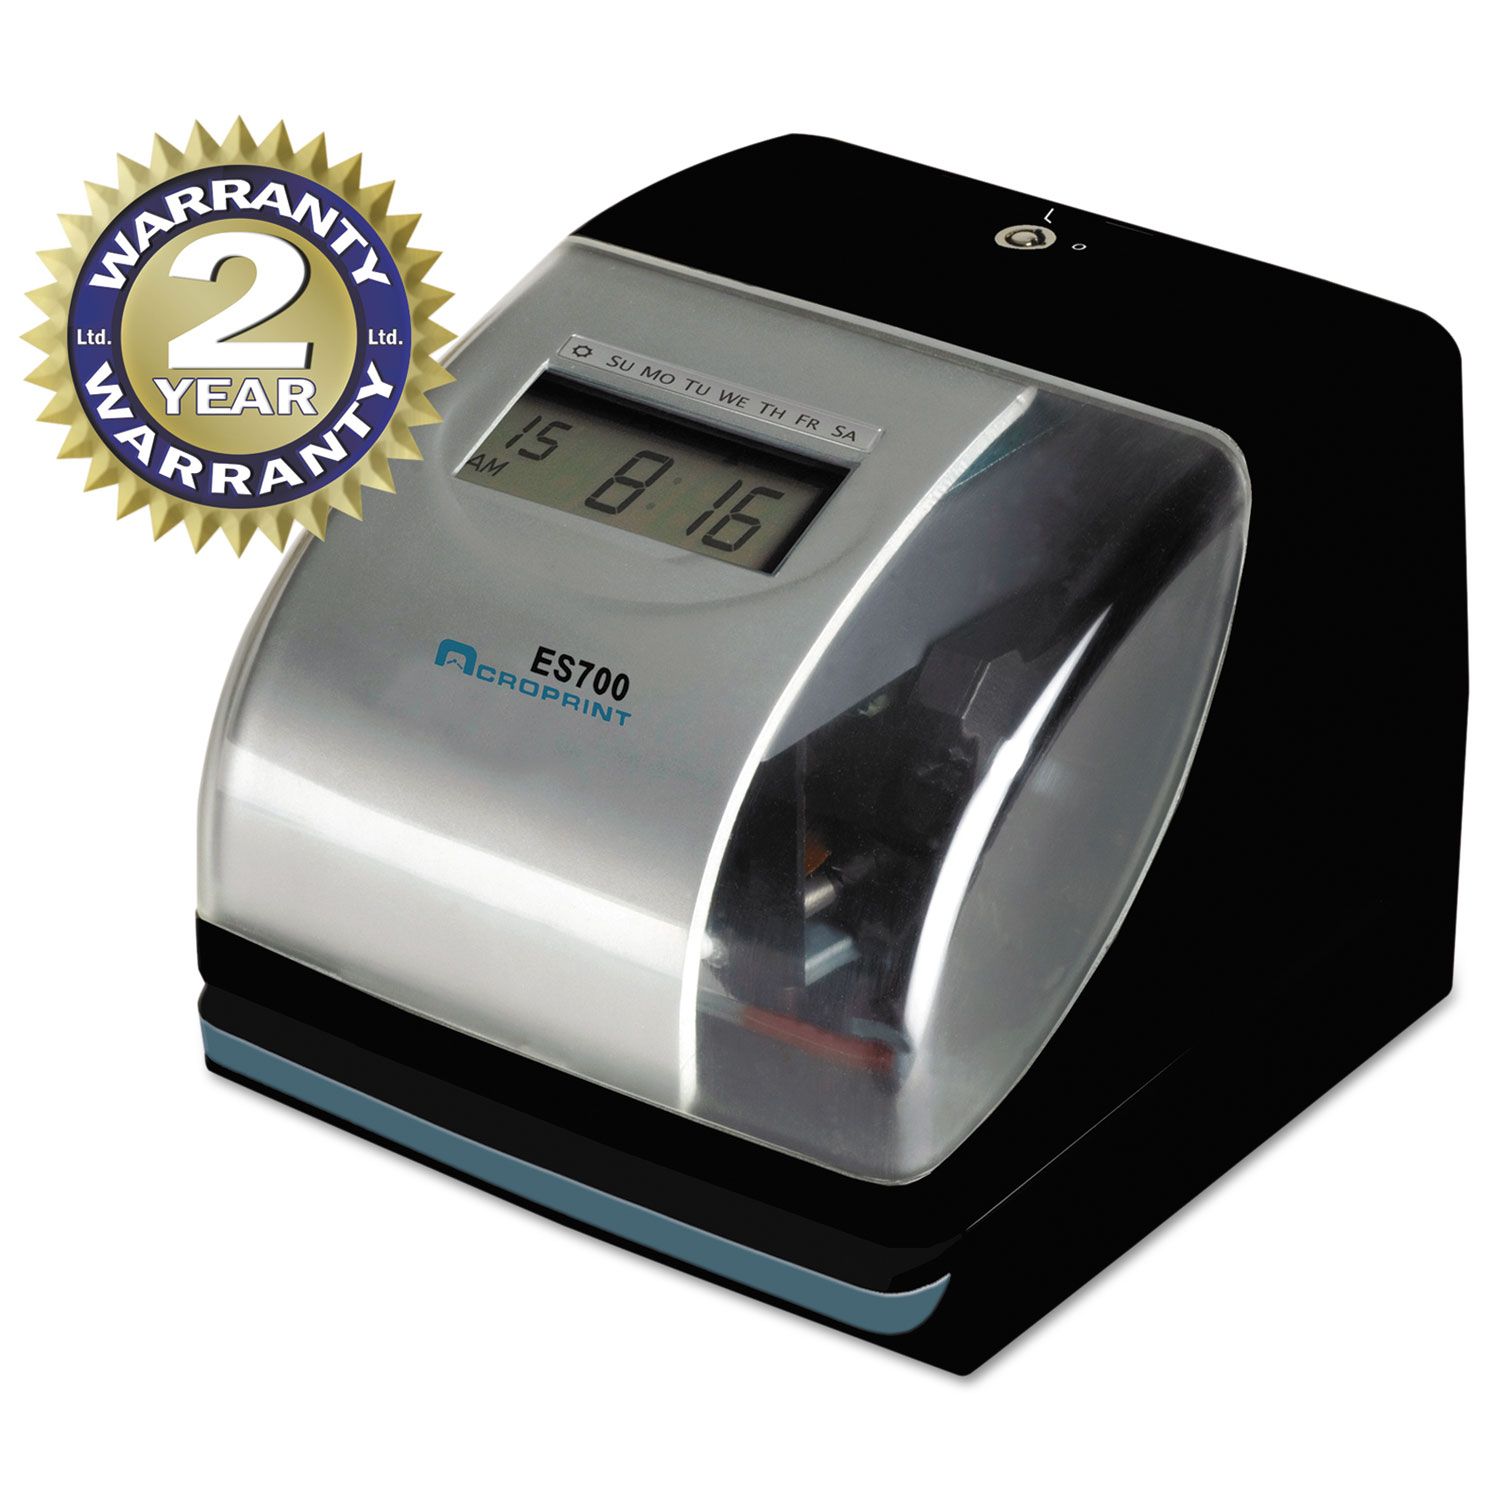  Acroprint 01-0182-000 ES700 Digital AutomaticTime Recorder, Silver and Black (ACP010182000) 